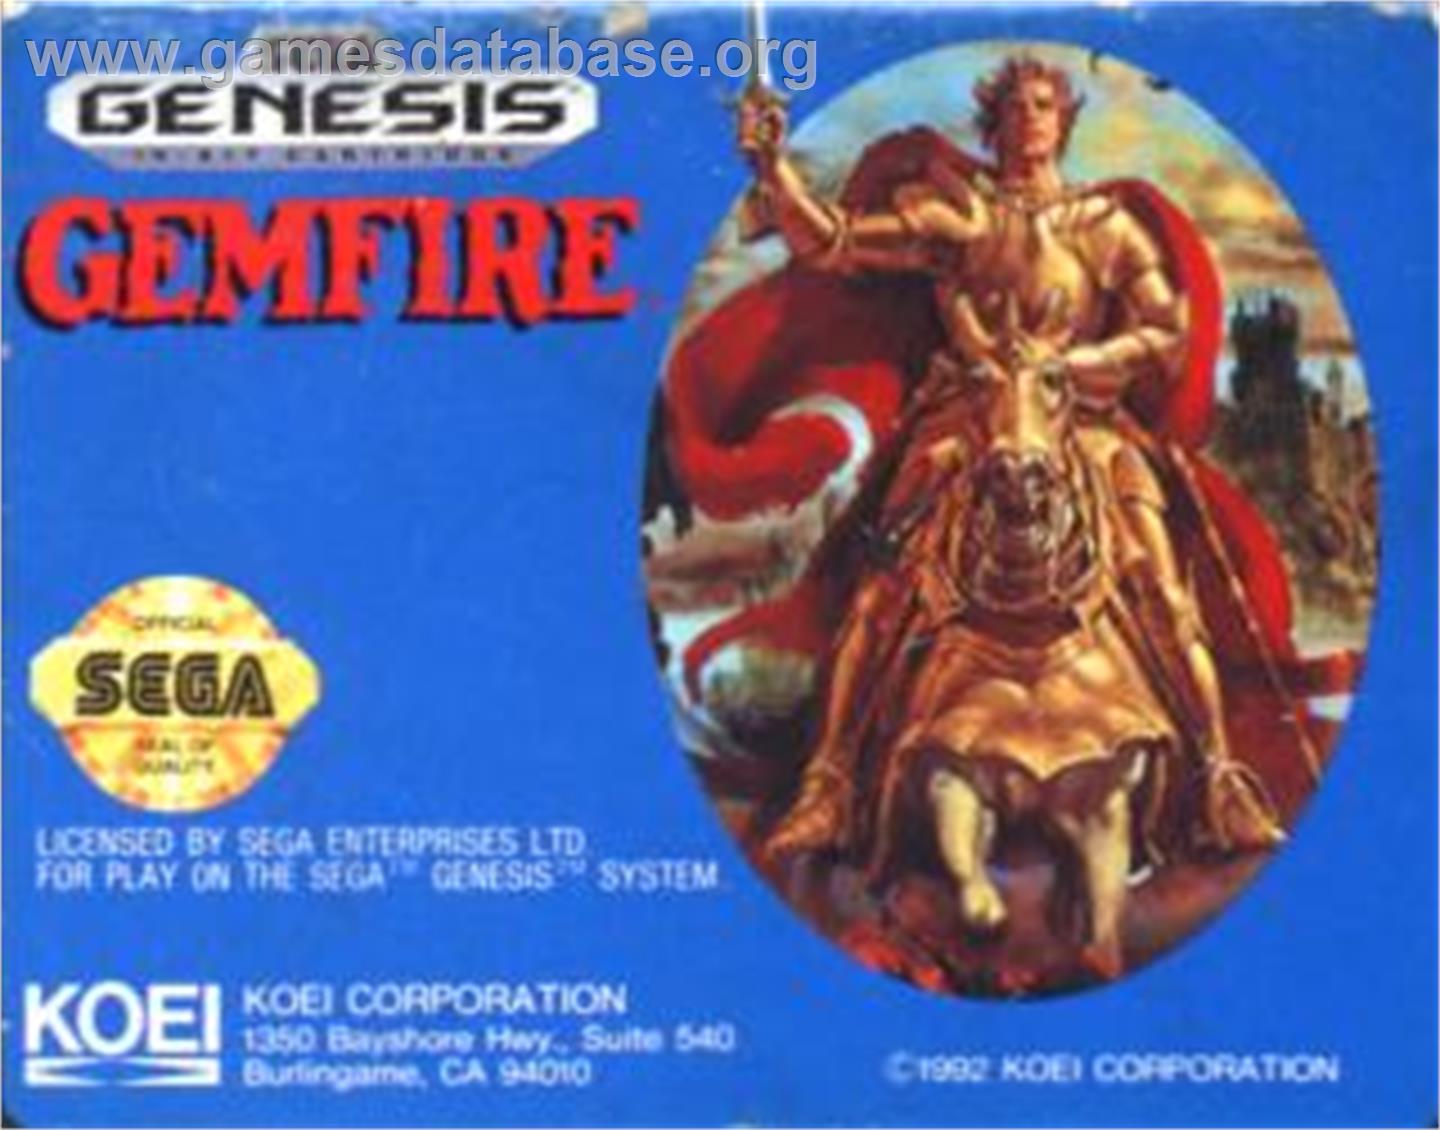 Gemfire - Sega Nomad - Artwork - Cartridge